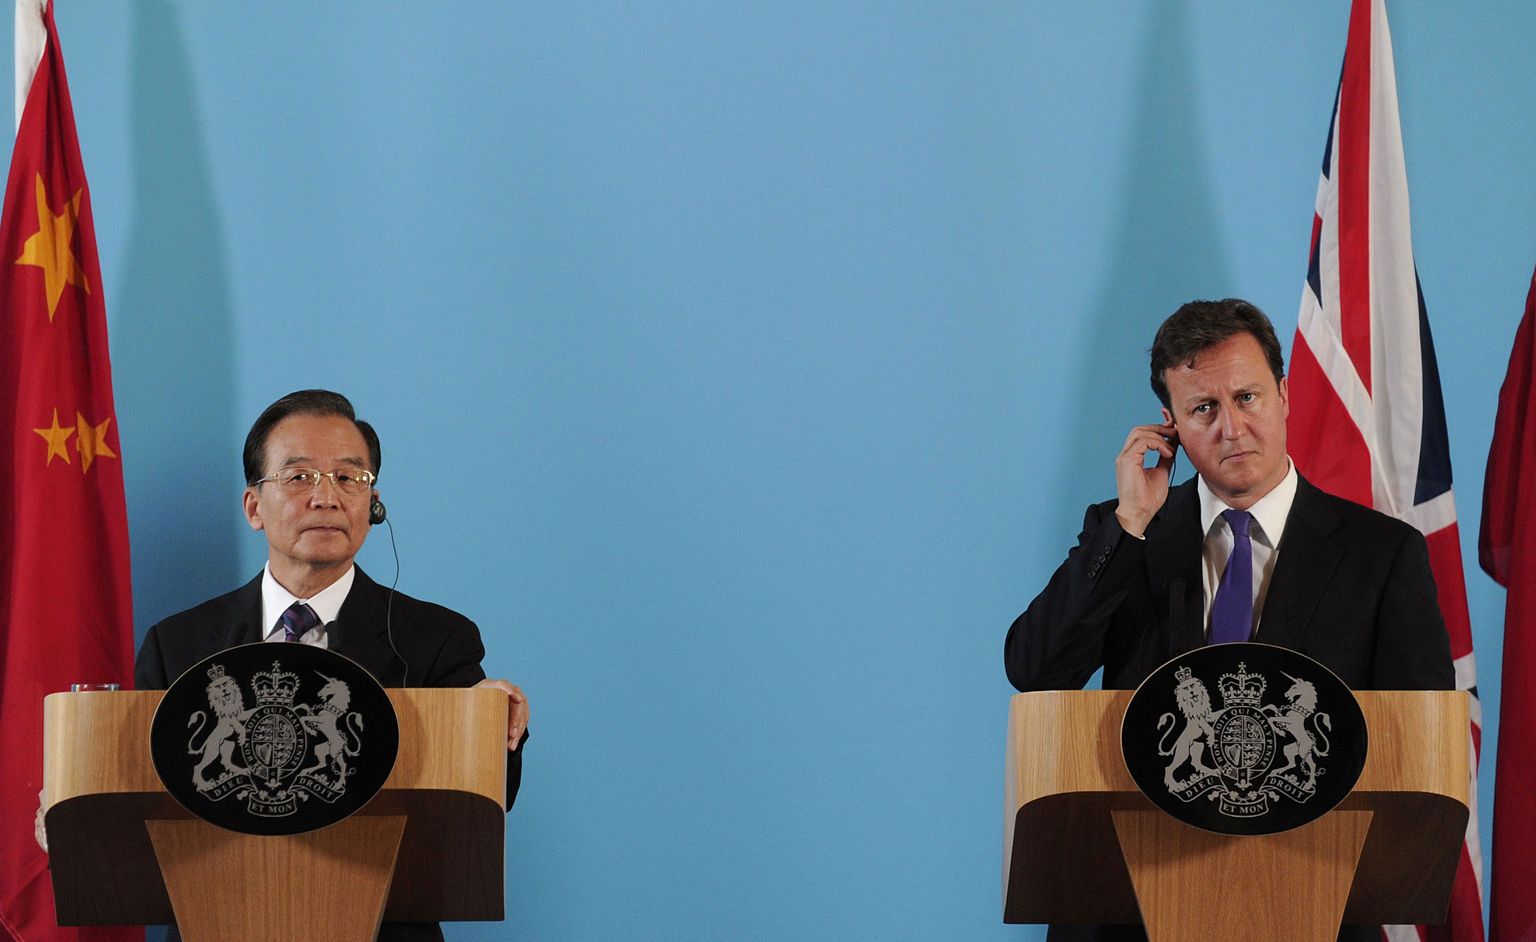 Hiina peaminister Wen Jiabao ja Suurbritannia peaminister David Cameron.